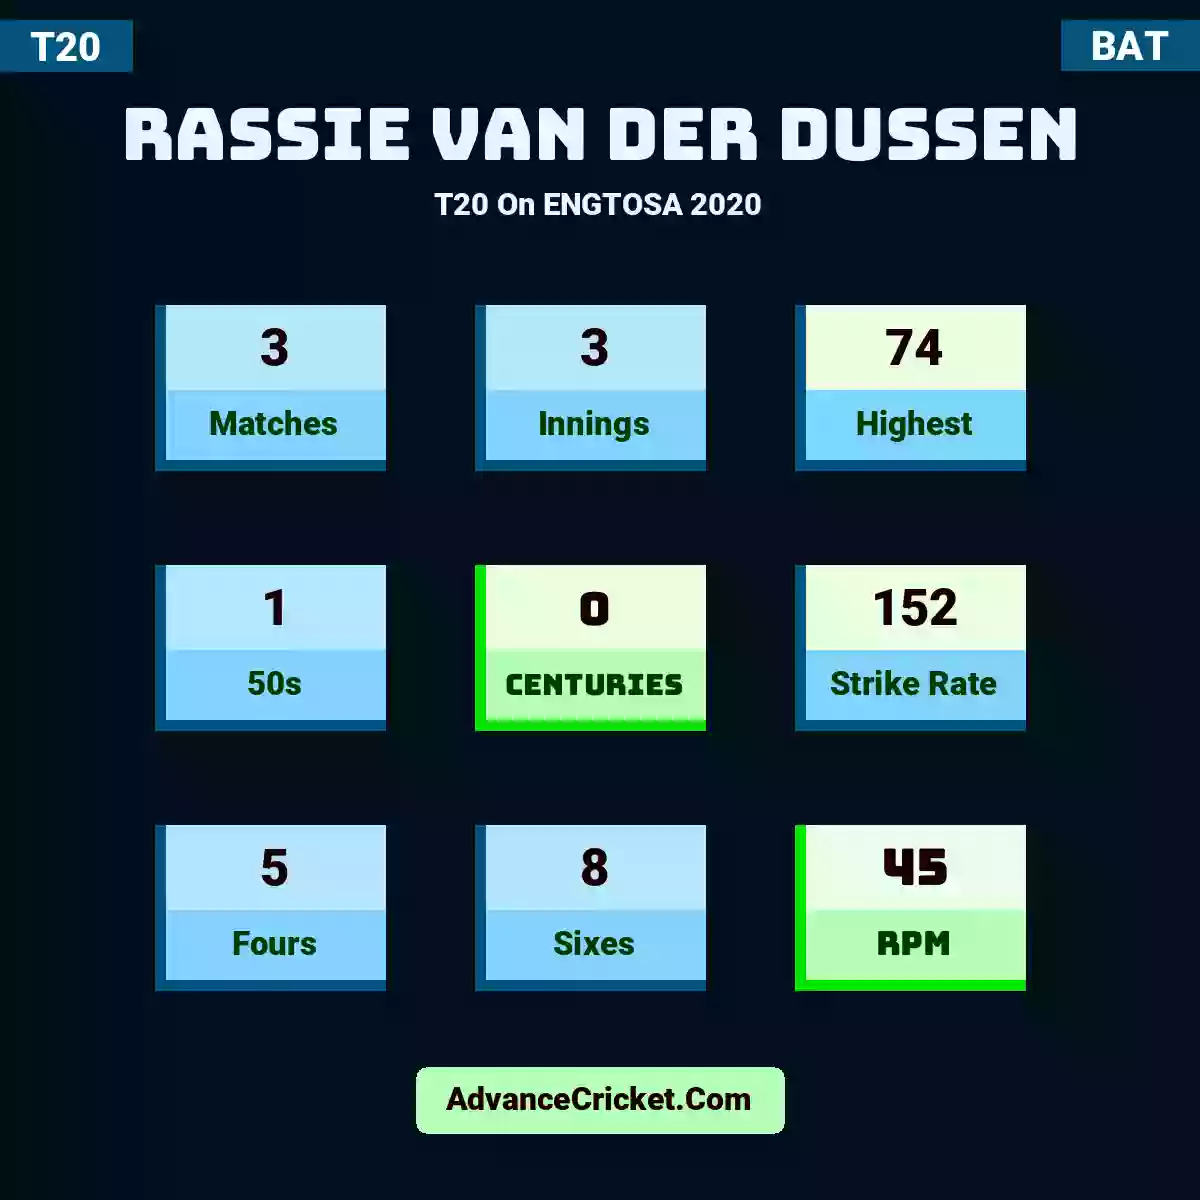 Rassie van der Dussen T20  On ENGTOSA 2020, Rassie van der Dussen played 3 matches, scored 74 runs as highest, 1 half-centuries, and 0 centuries, with a strike rate of 152. R.Dussen hit 5 fours and 8 sixes, with an RPM of 45.